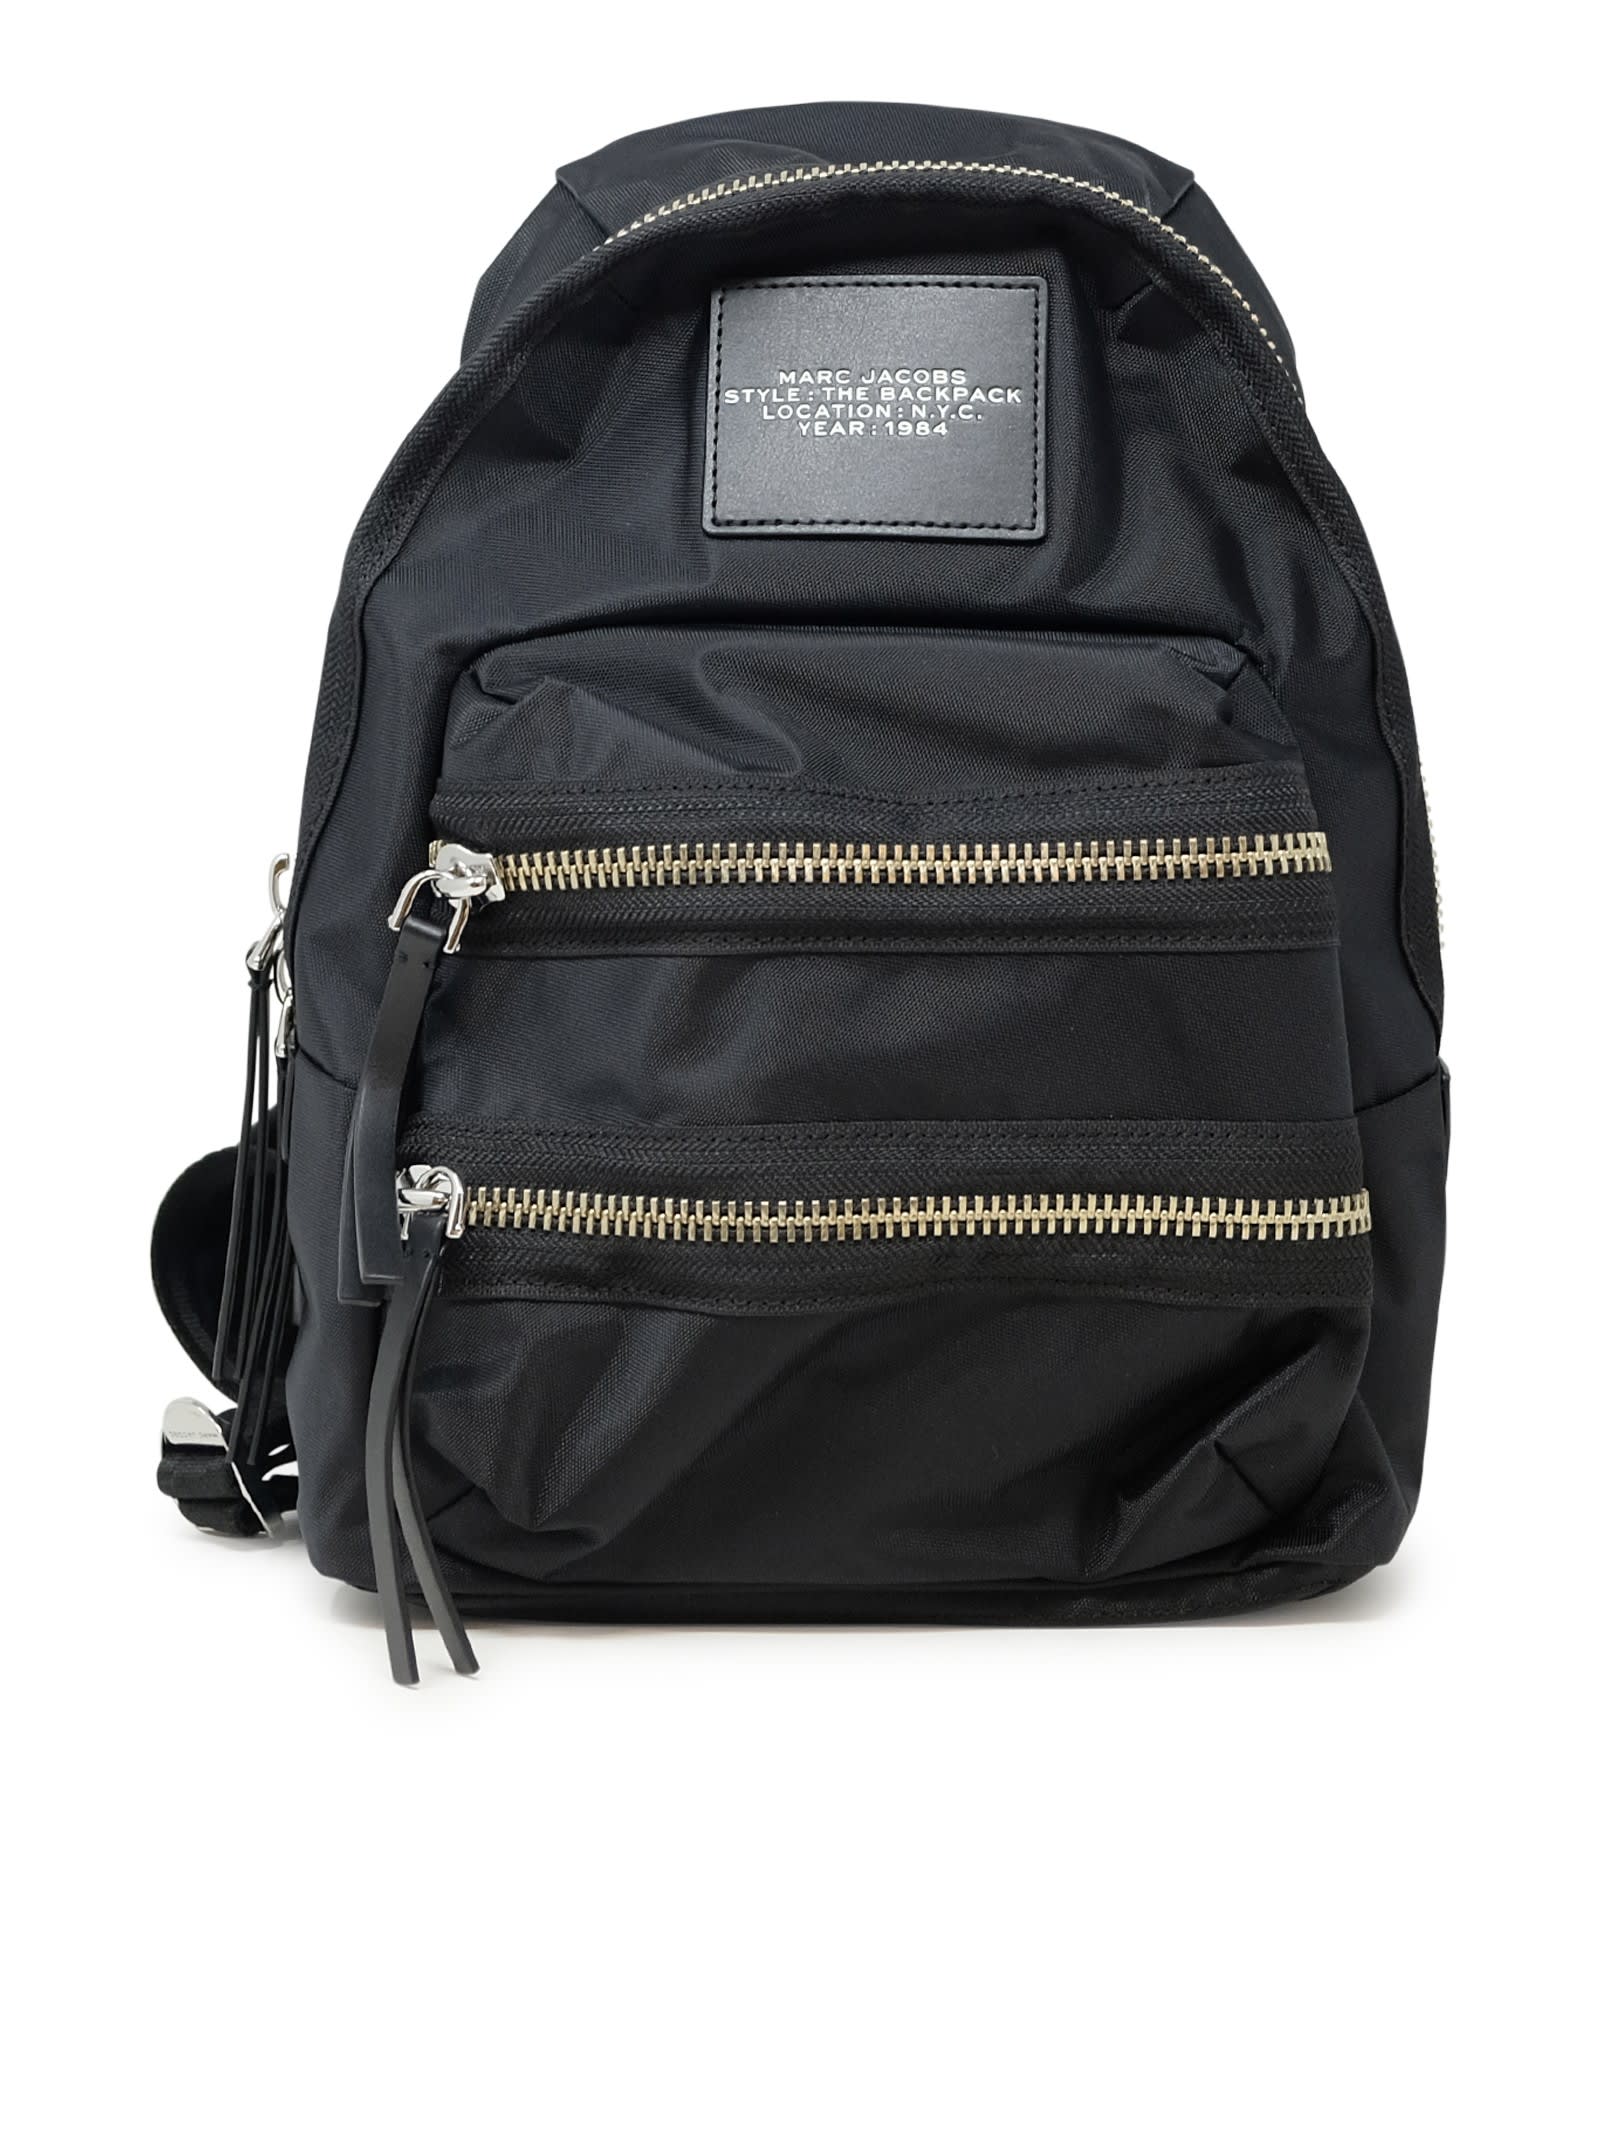 Black Nylon The Medium Backpack